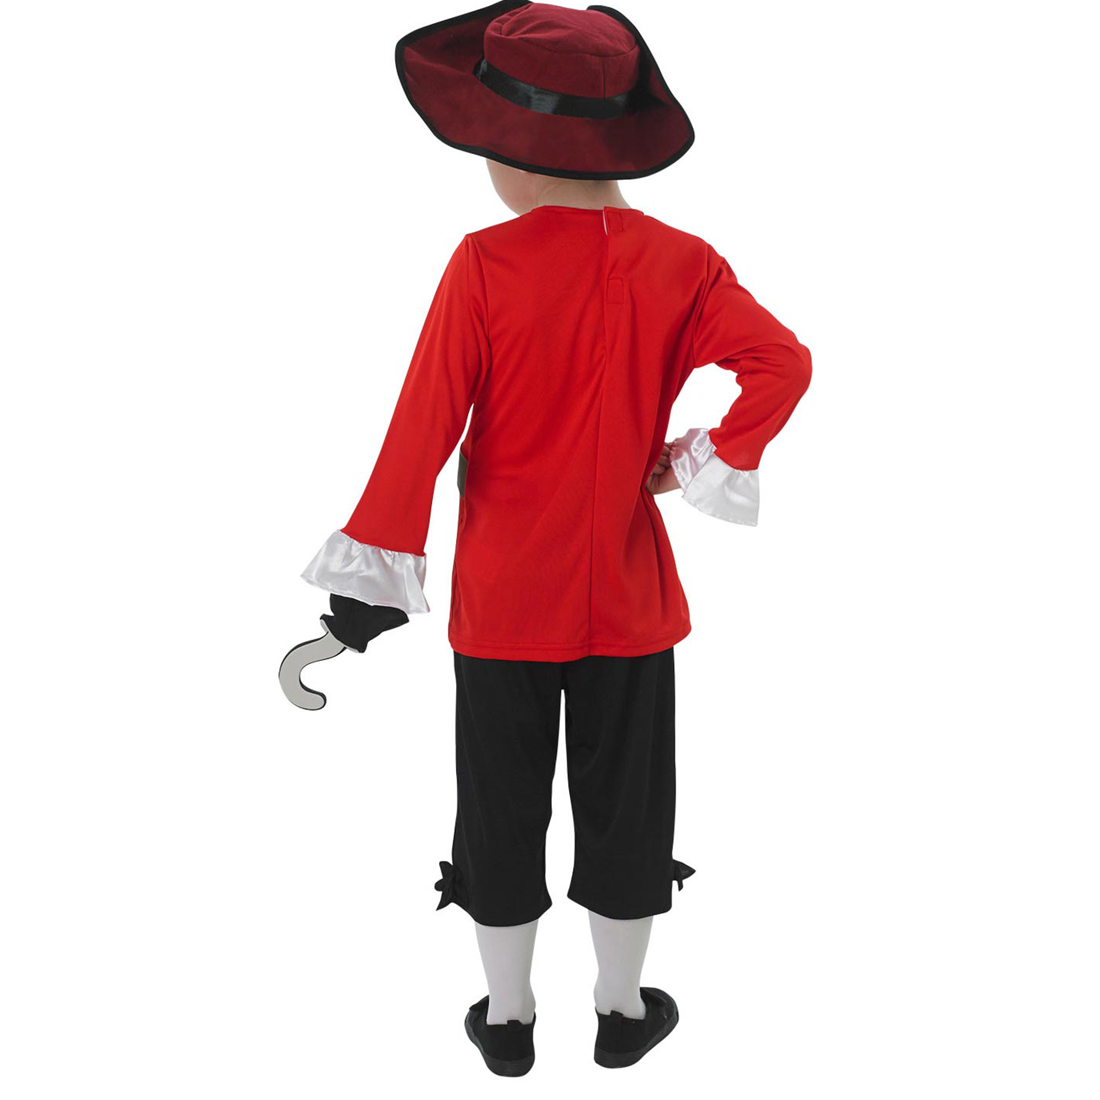 Deluxe Disney Captain Hook Childs Costume